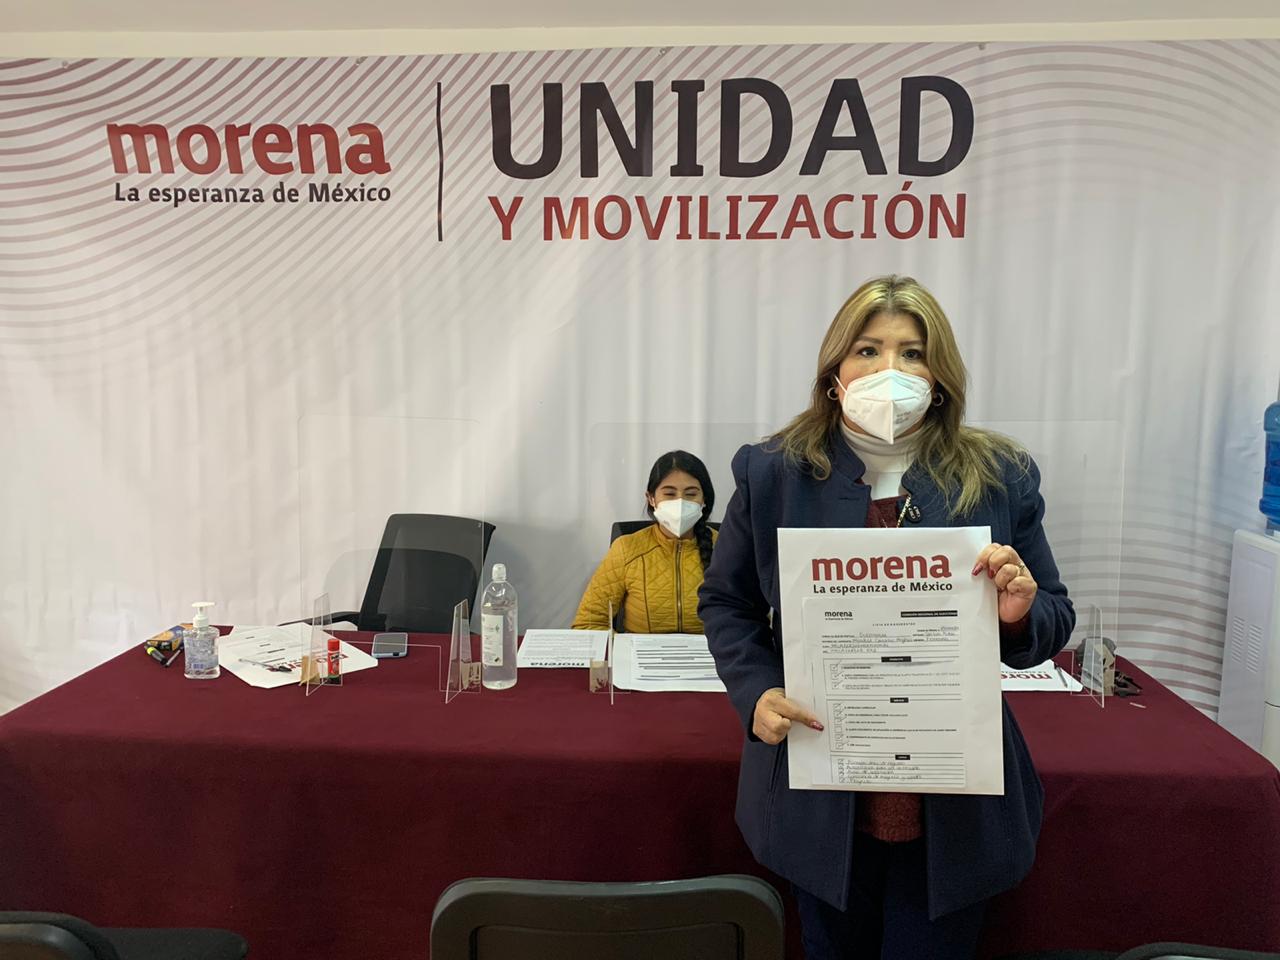  La diputada local Angélica Mendoza se registra como precandidata de Morena